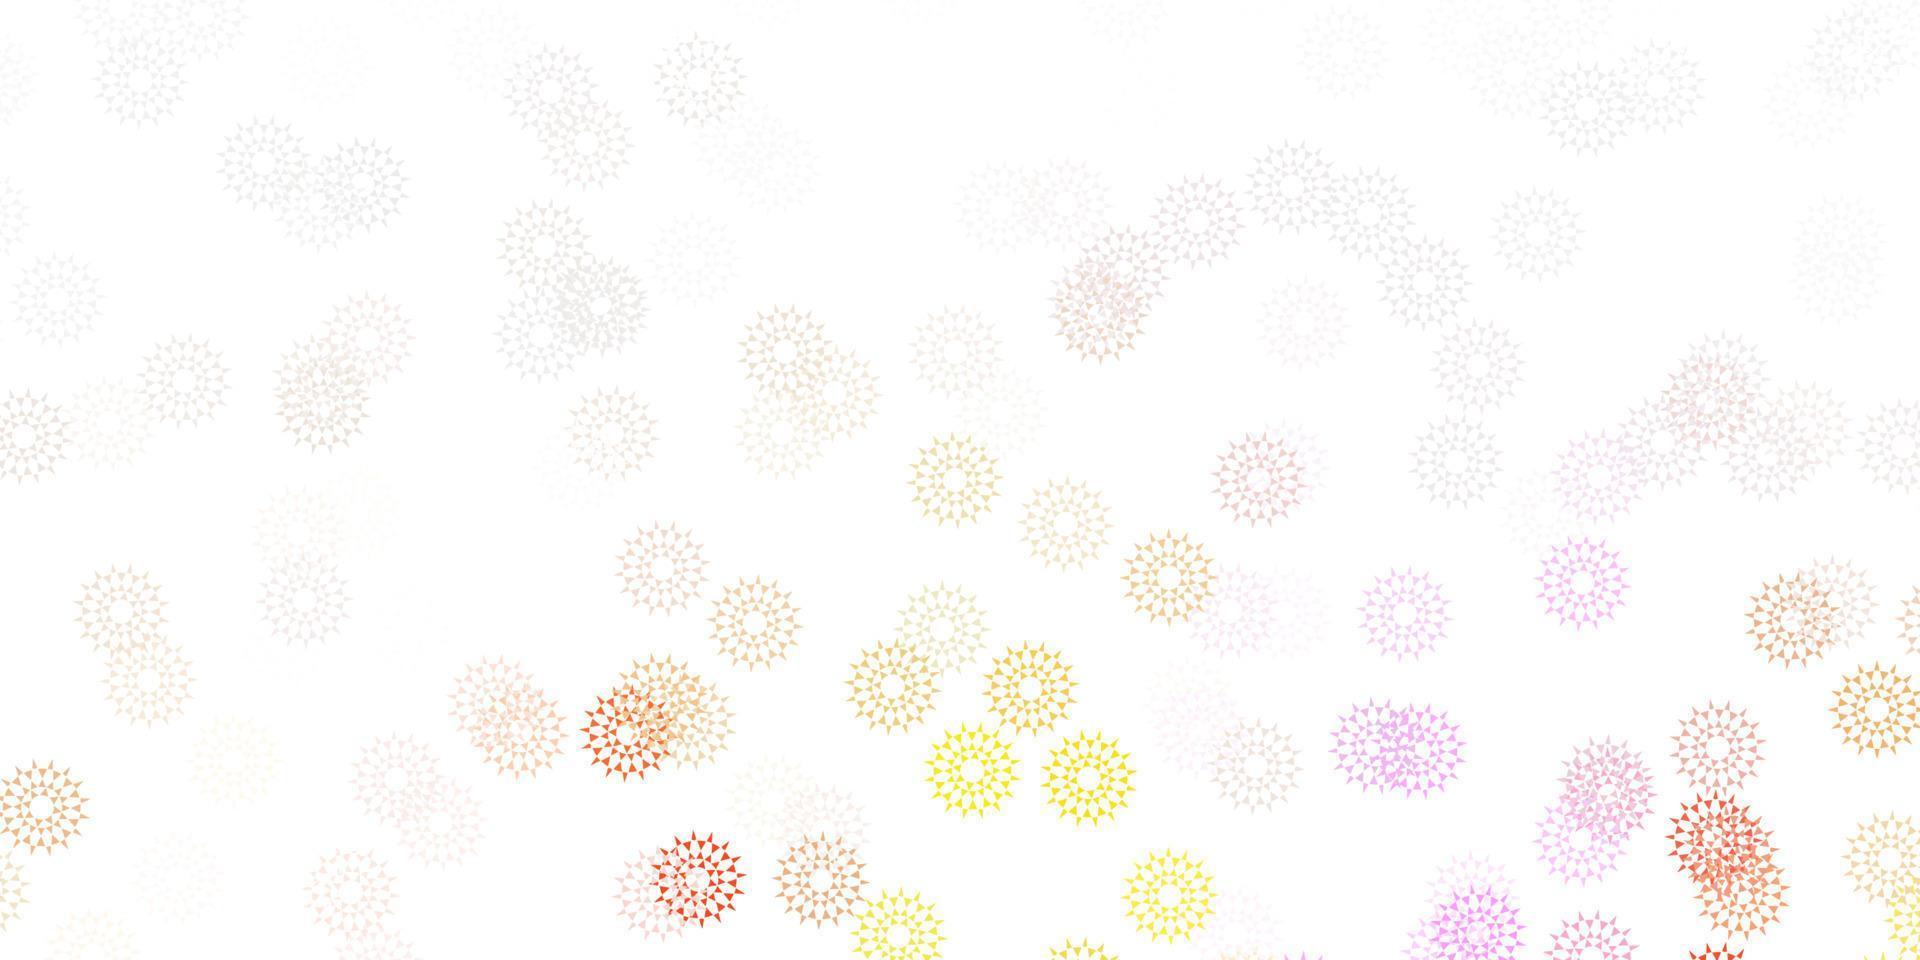 ljusrosa, gula vektor doodle bakgrund med blommor.